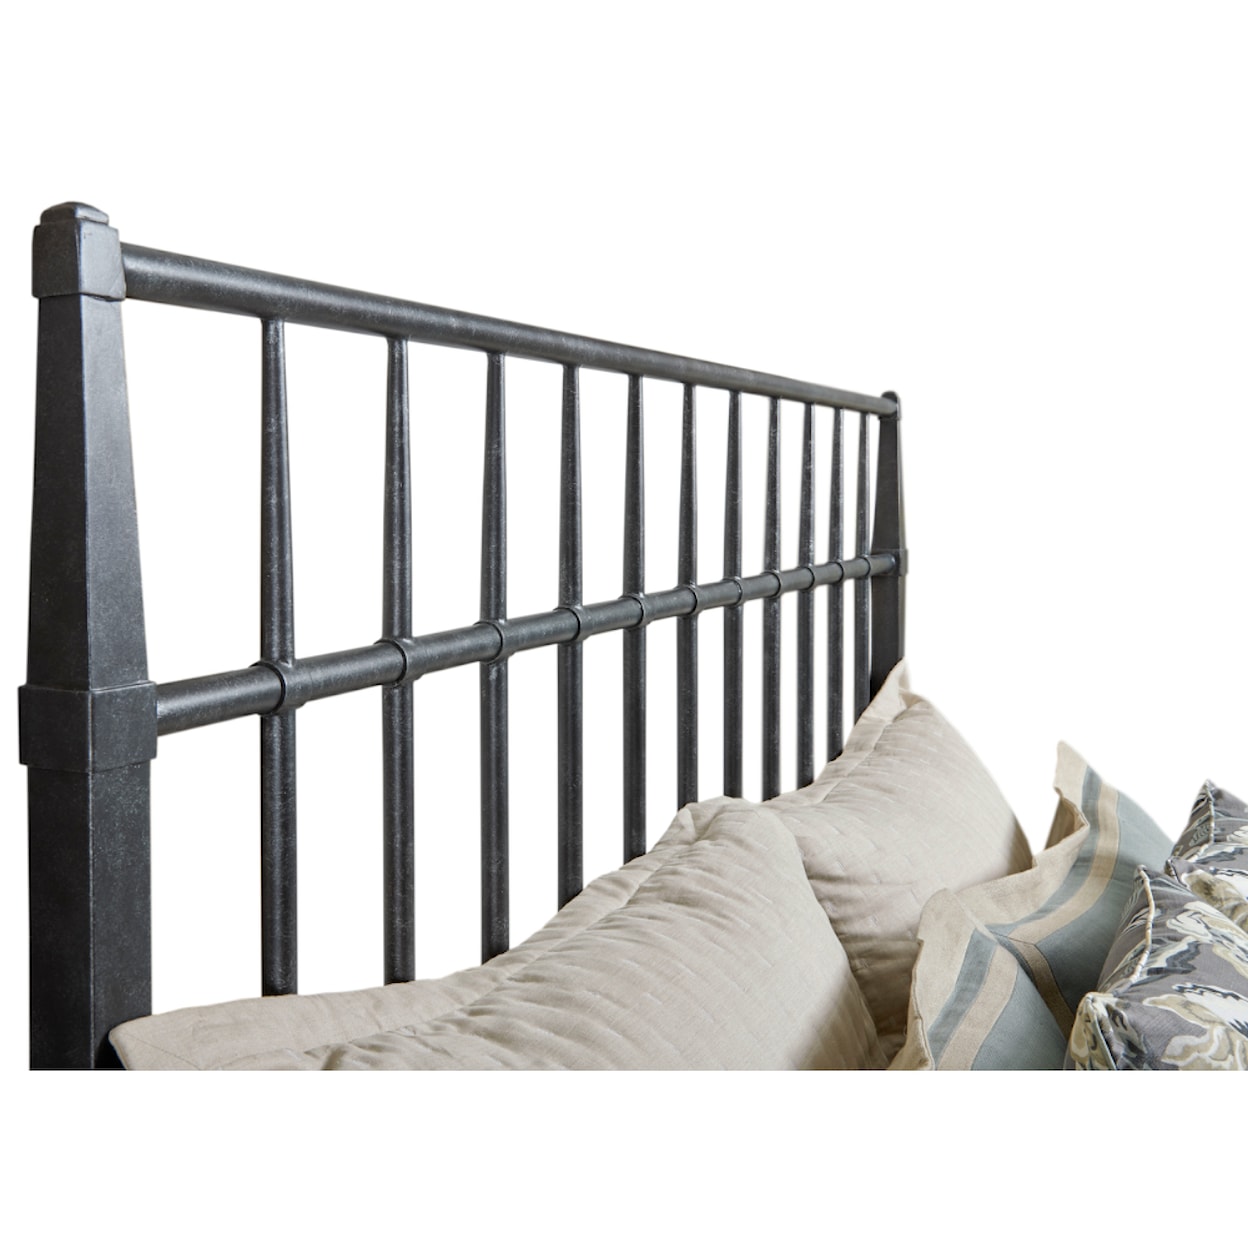 Kincaid Furniture Acquisitions Sylvan Queen Metal Bed